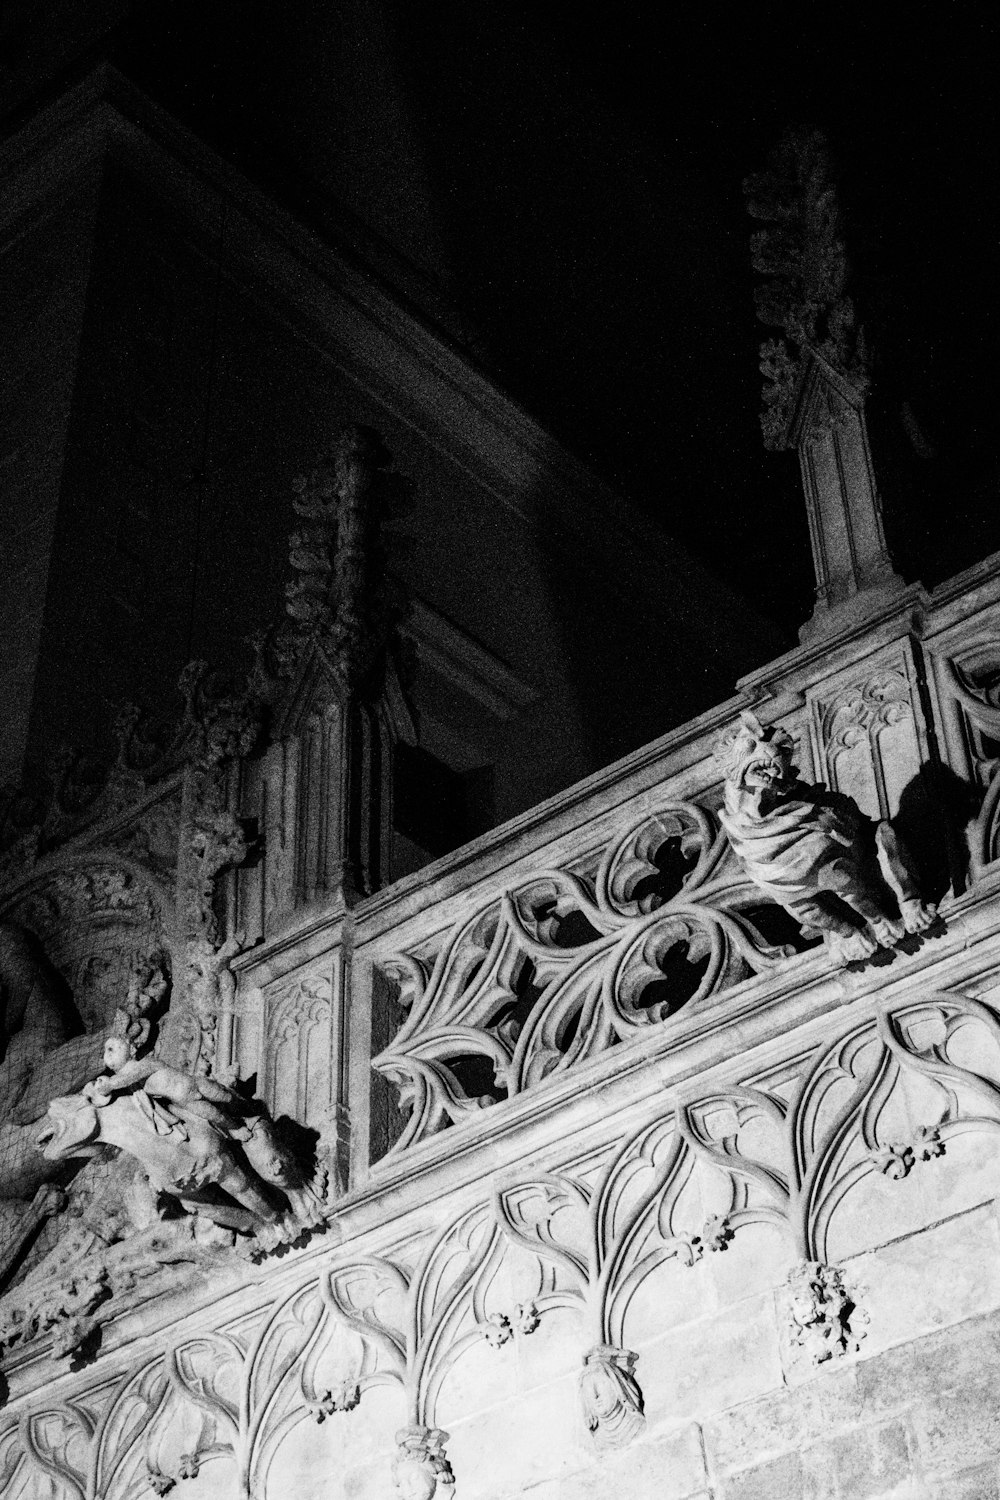 white ornate railings